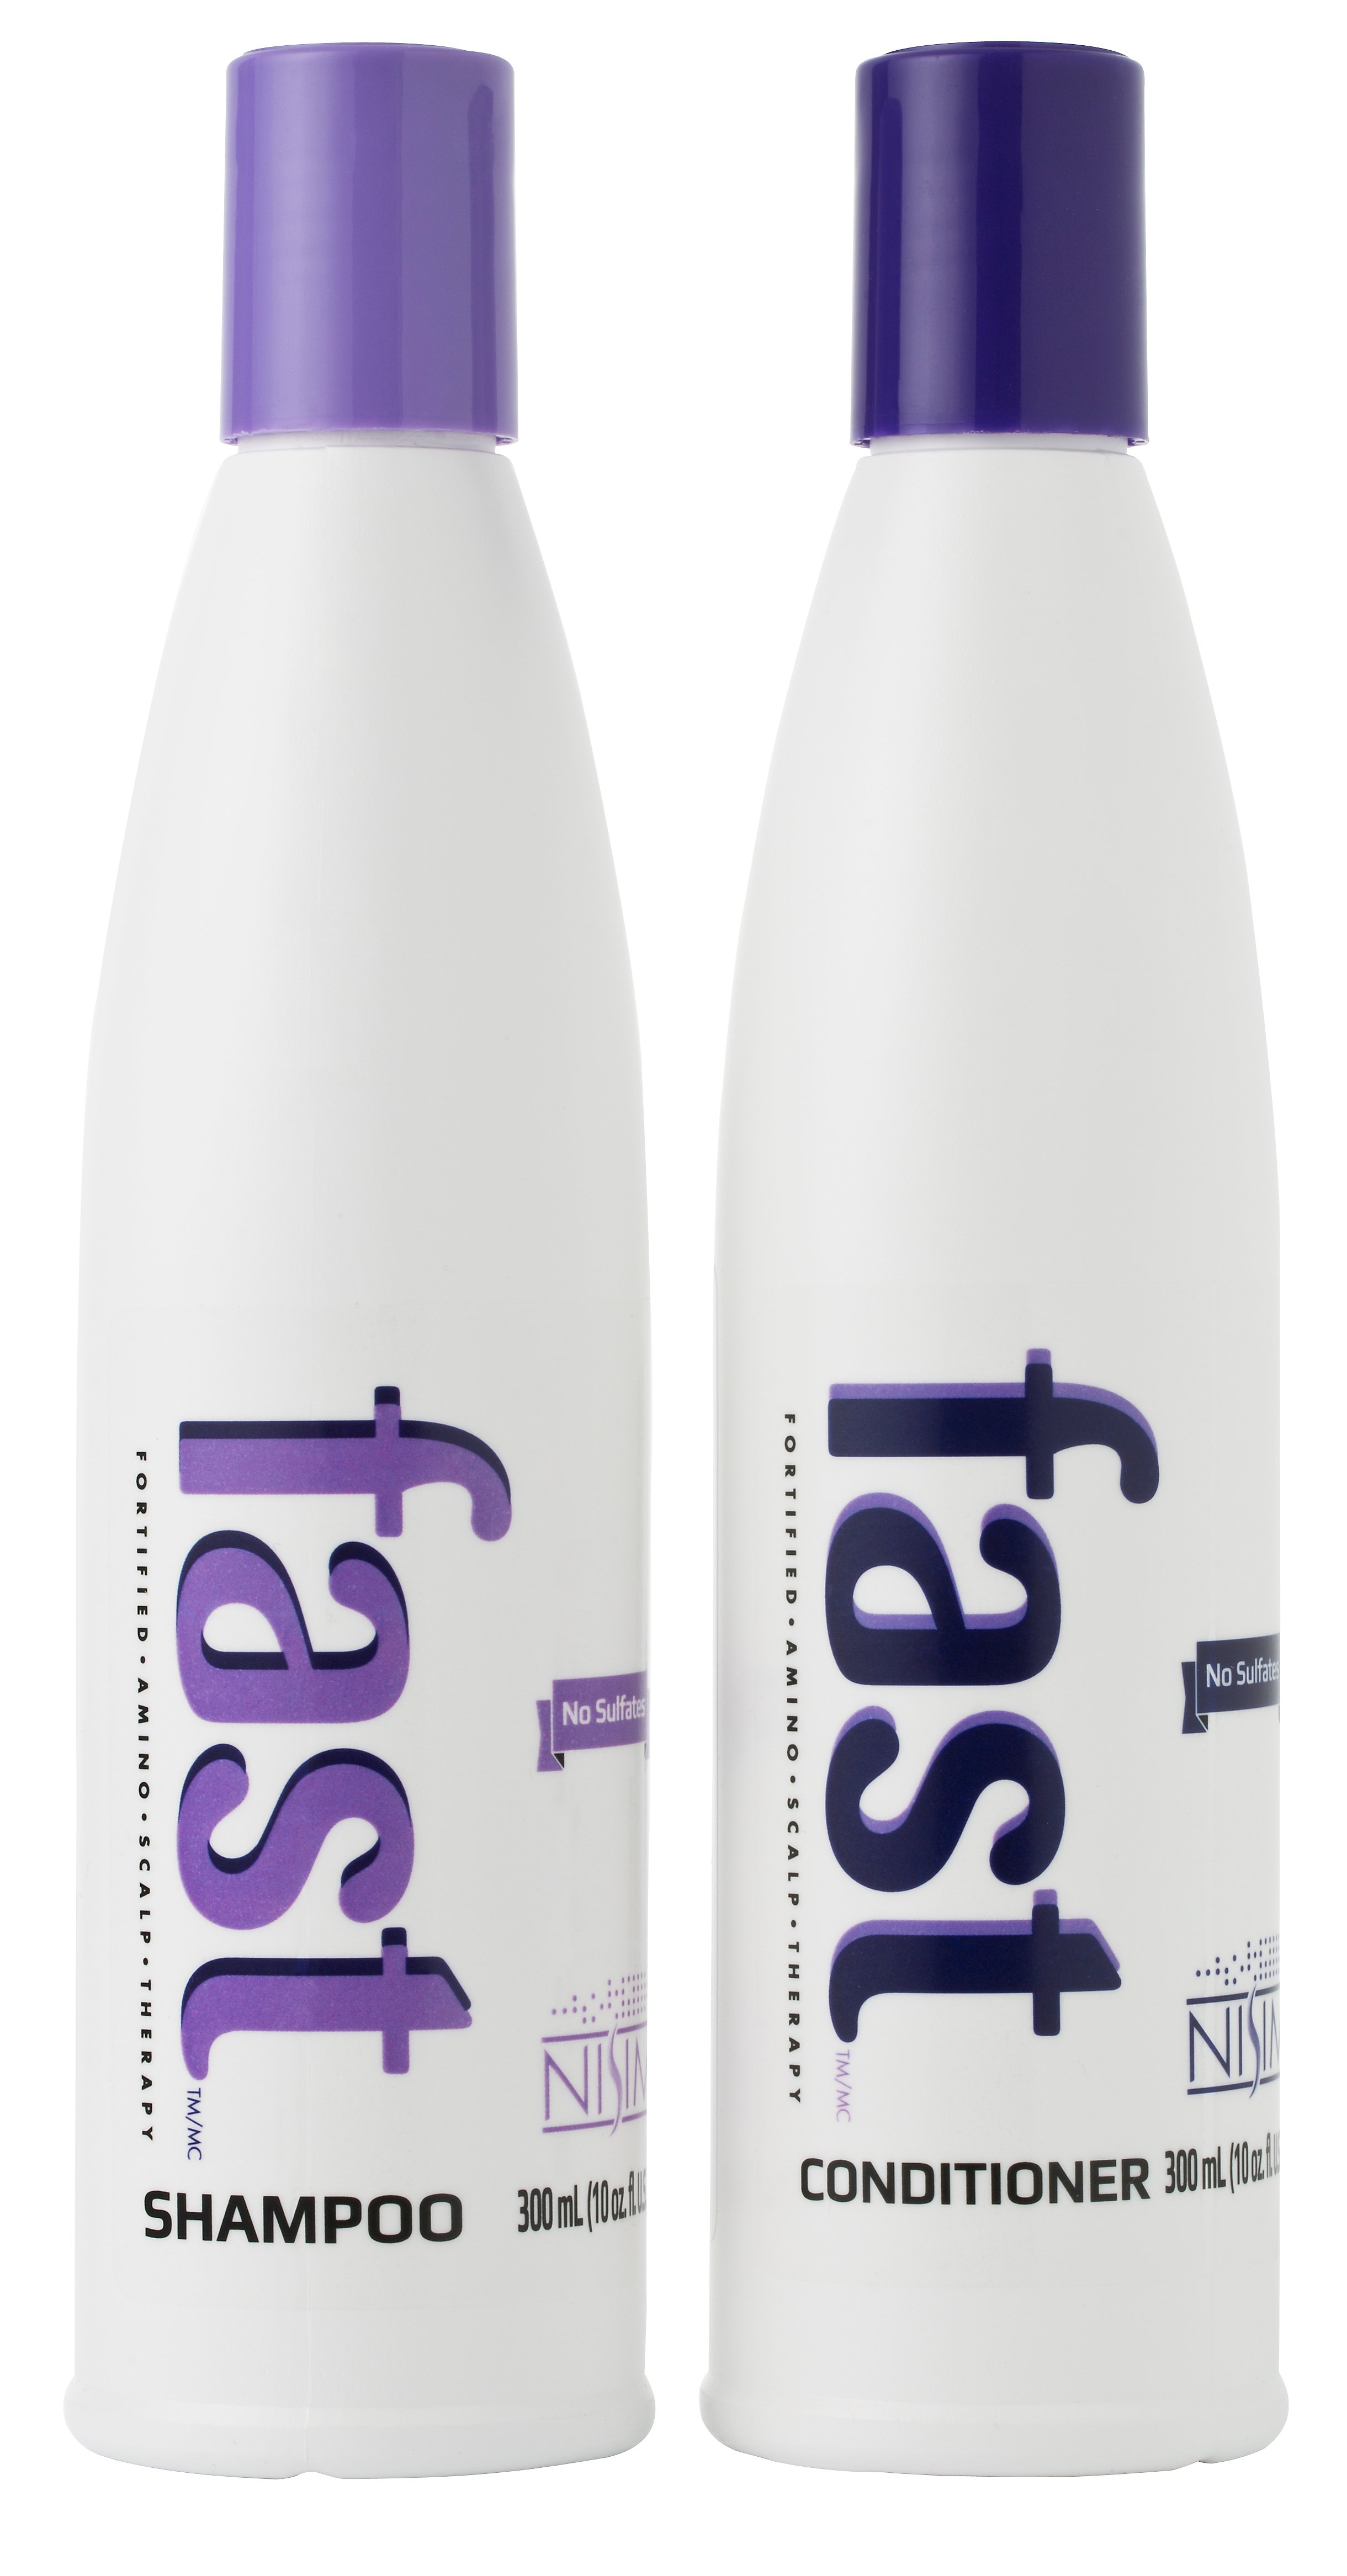 Nisim Fast Shampoo & Conditioner, 2 x 300 ml